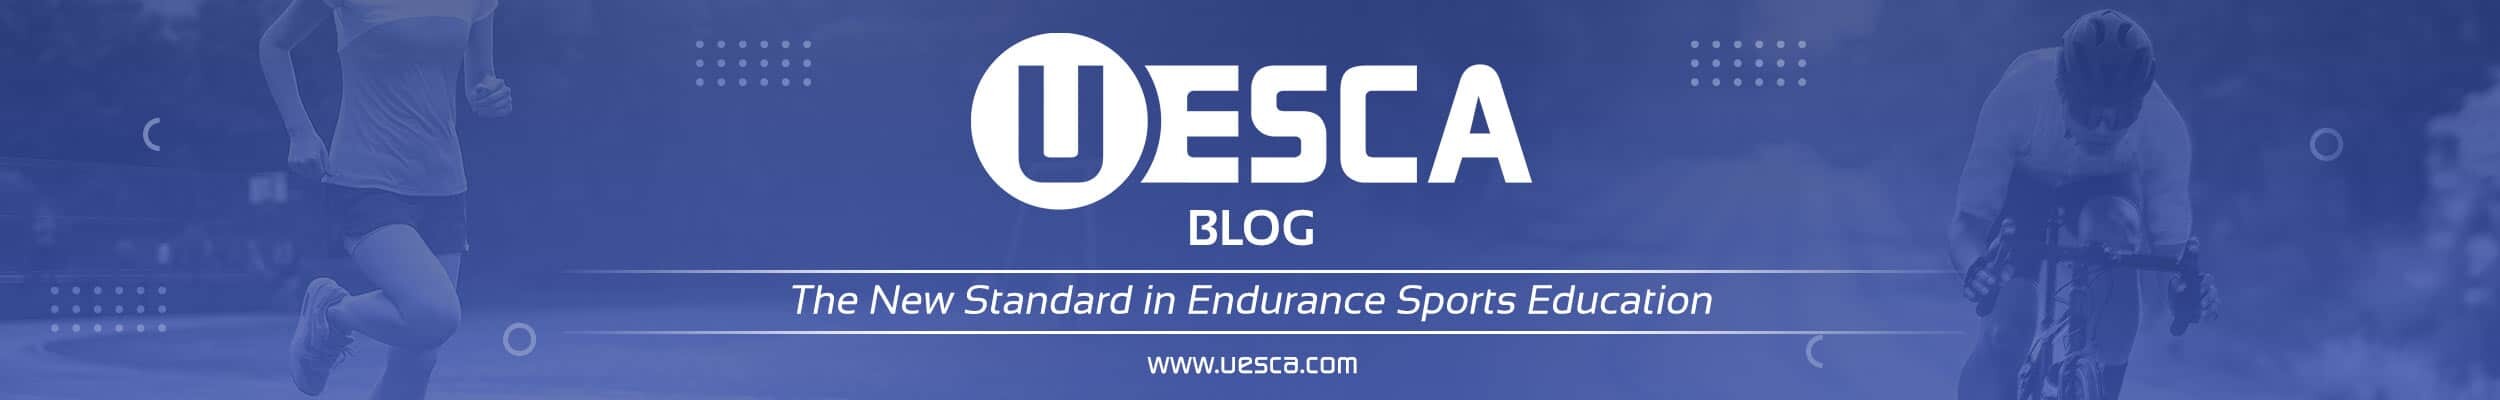 UESCA blog